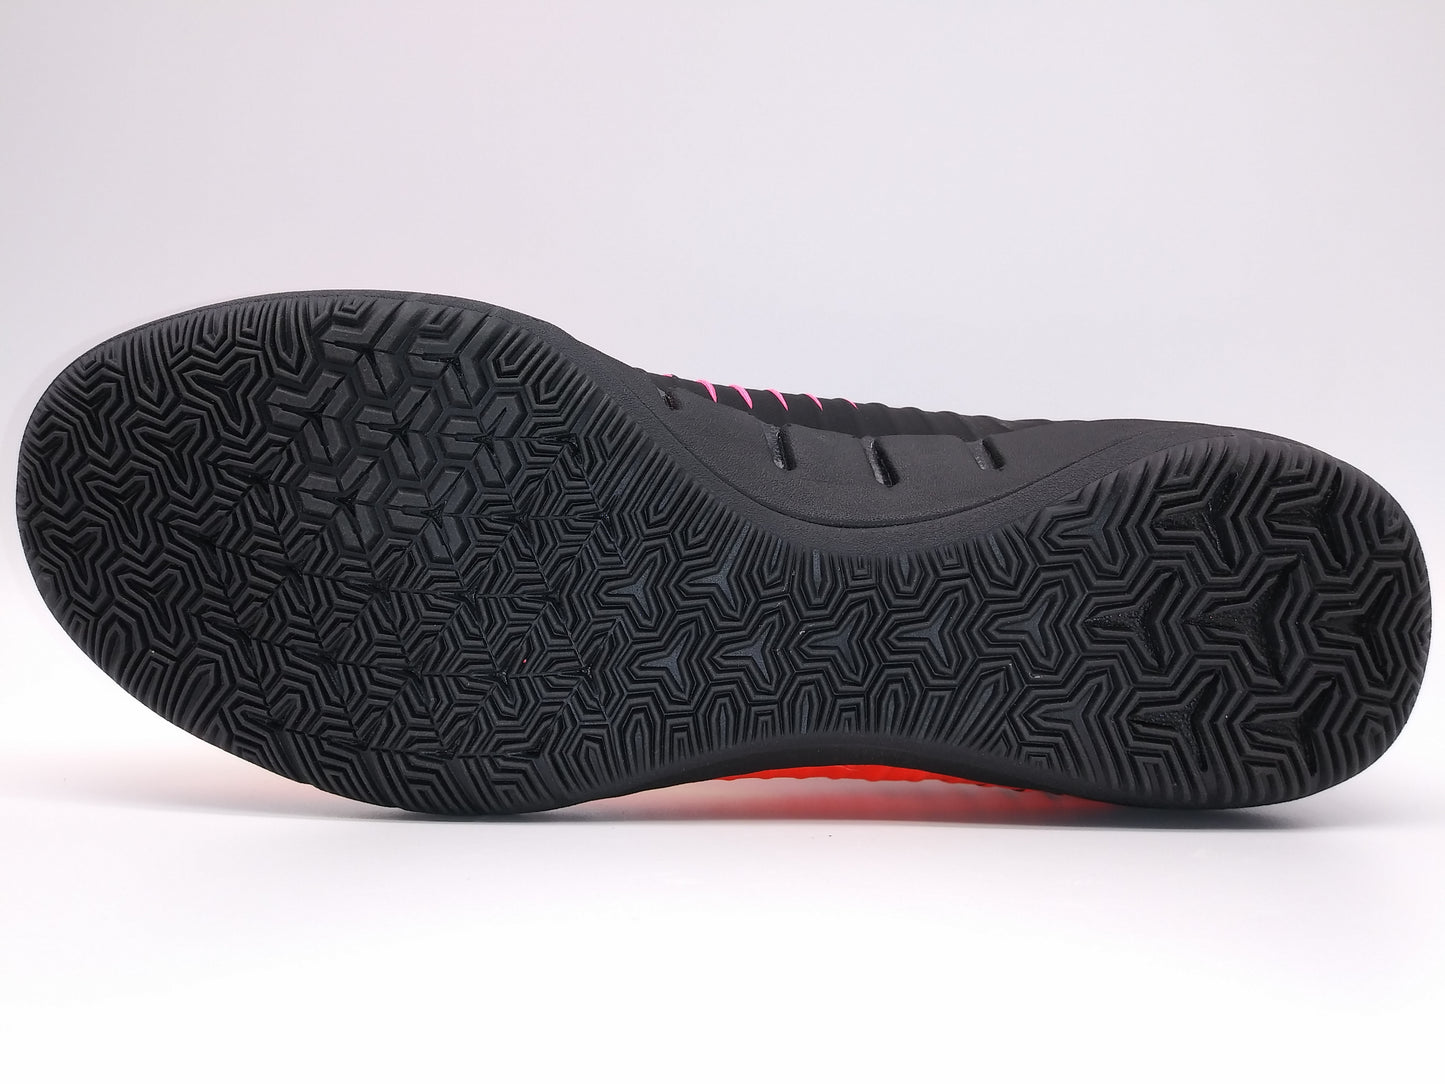 Nike Mercurialx Finale II IC Black Pink